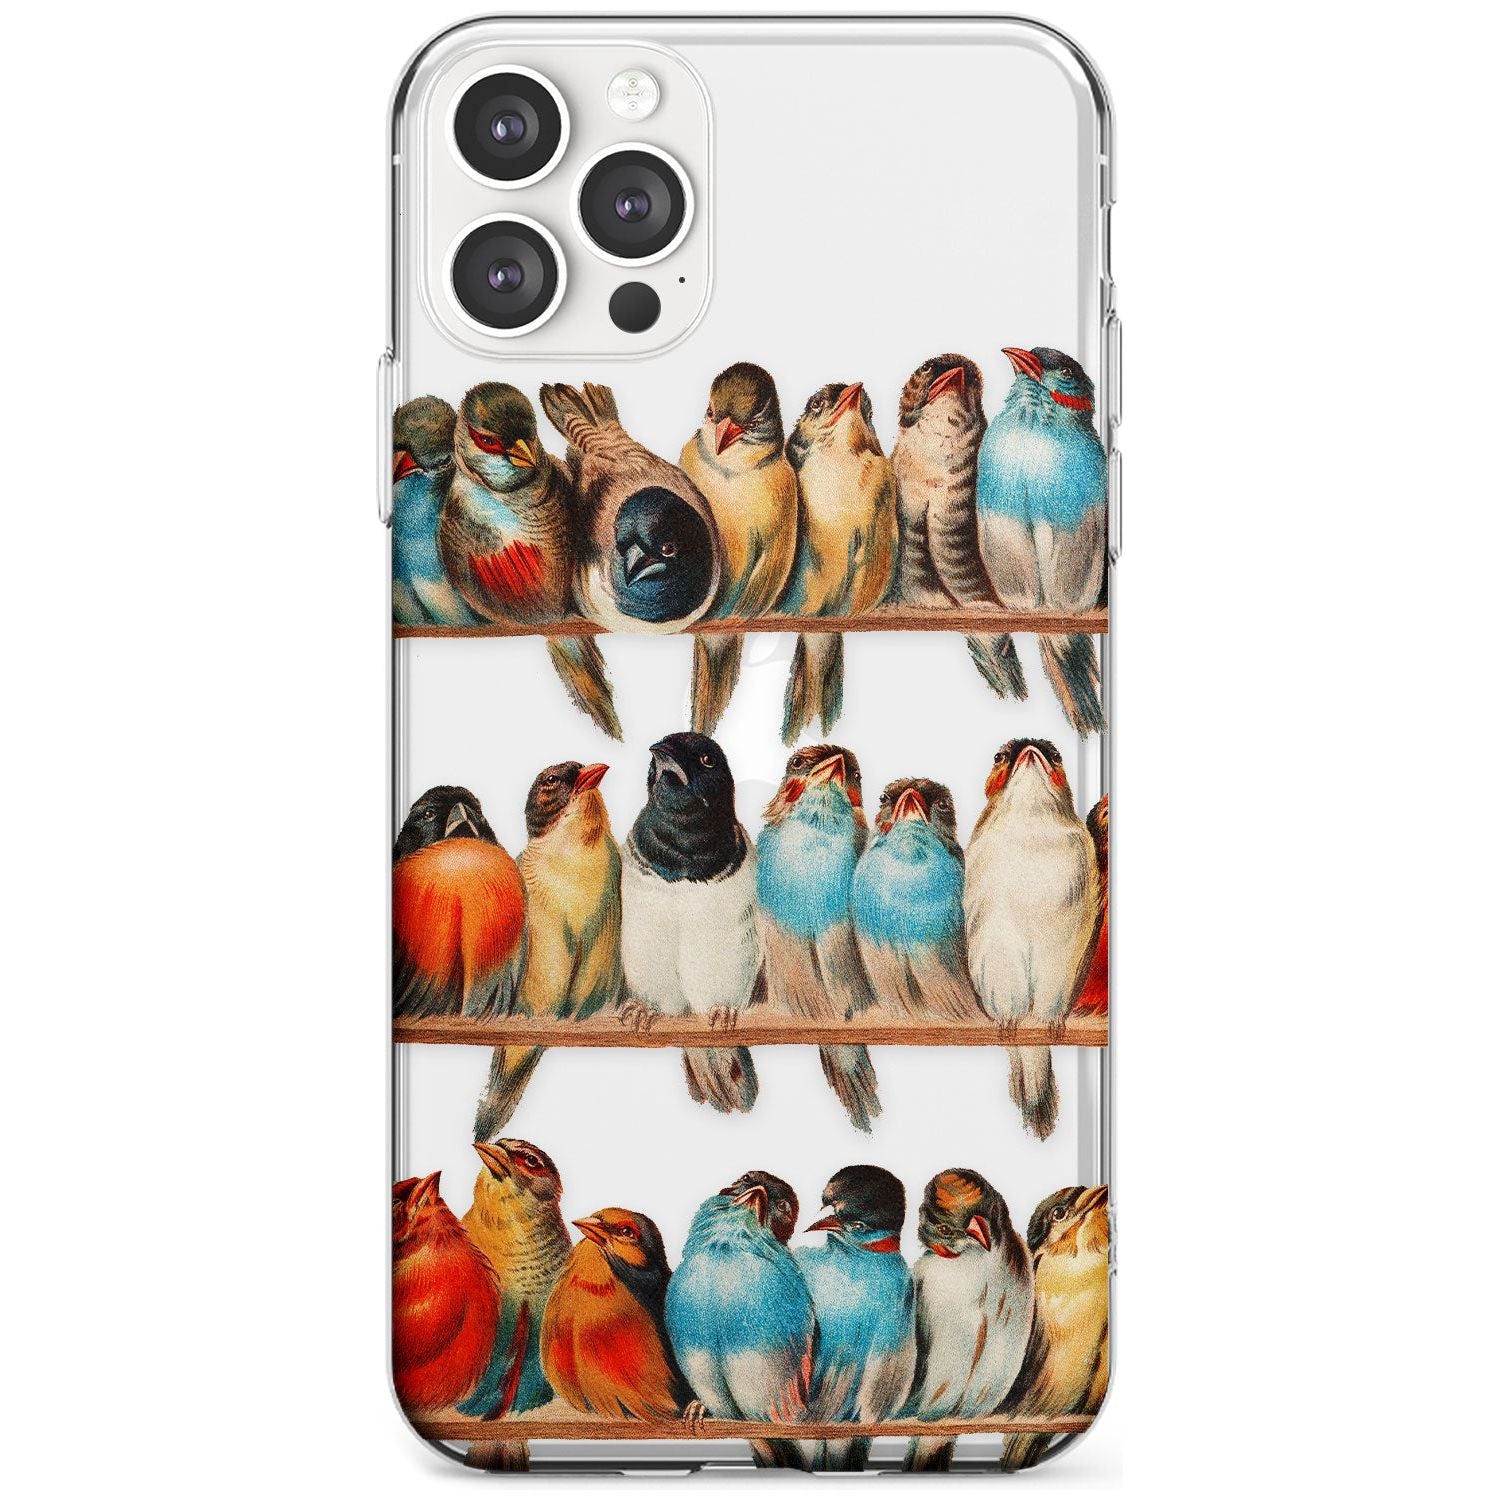 A Perch of Birds Slim TPU Phone Case for iPhone 11 Pro Max